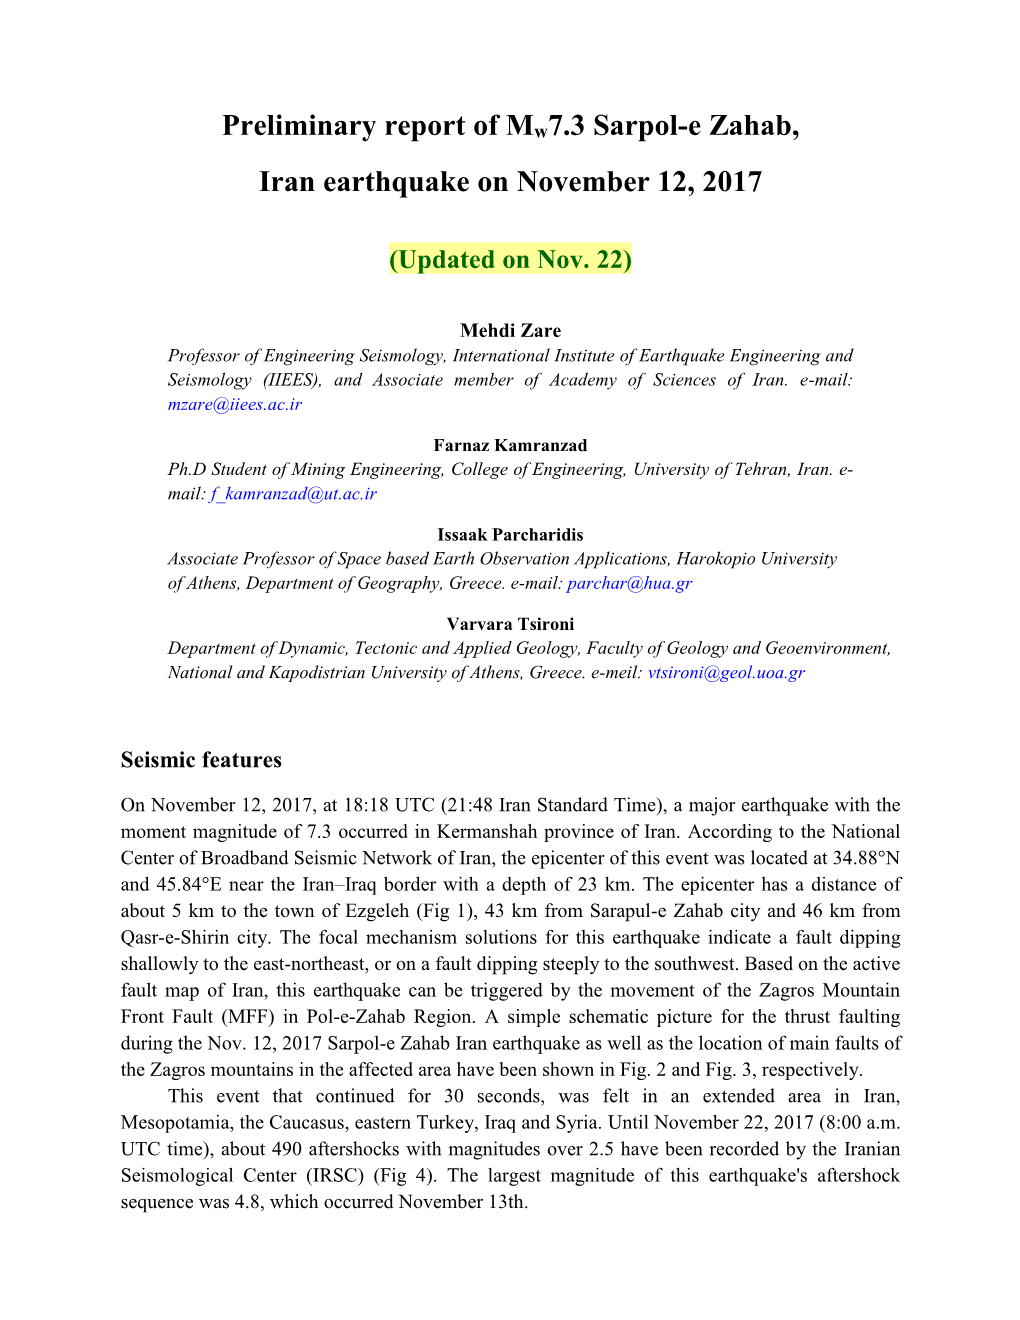 Preliminary Report of Mw7.3 Sarpol-E Zahab, Iran Earthquake on November 12, 2017